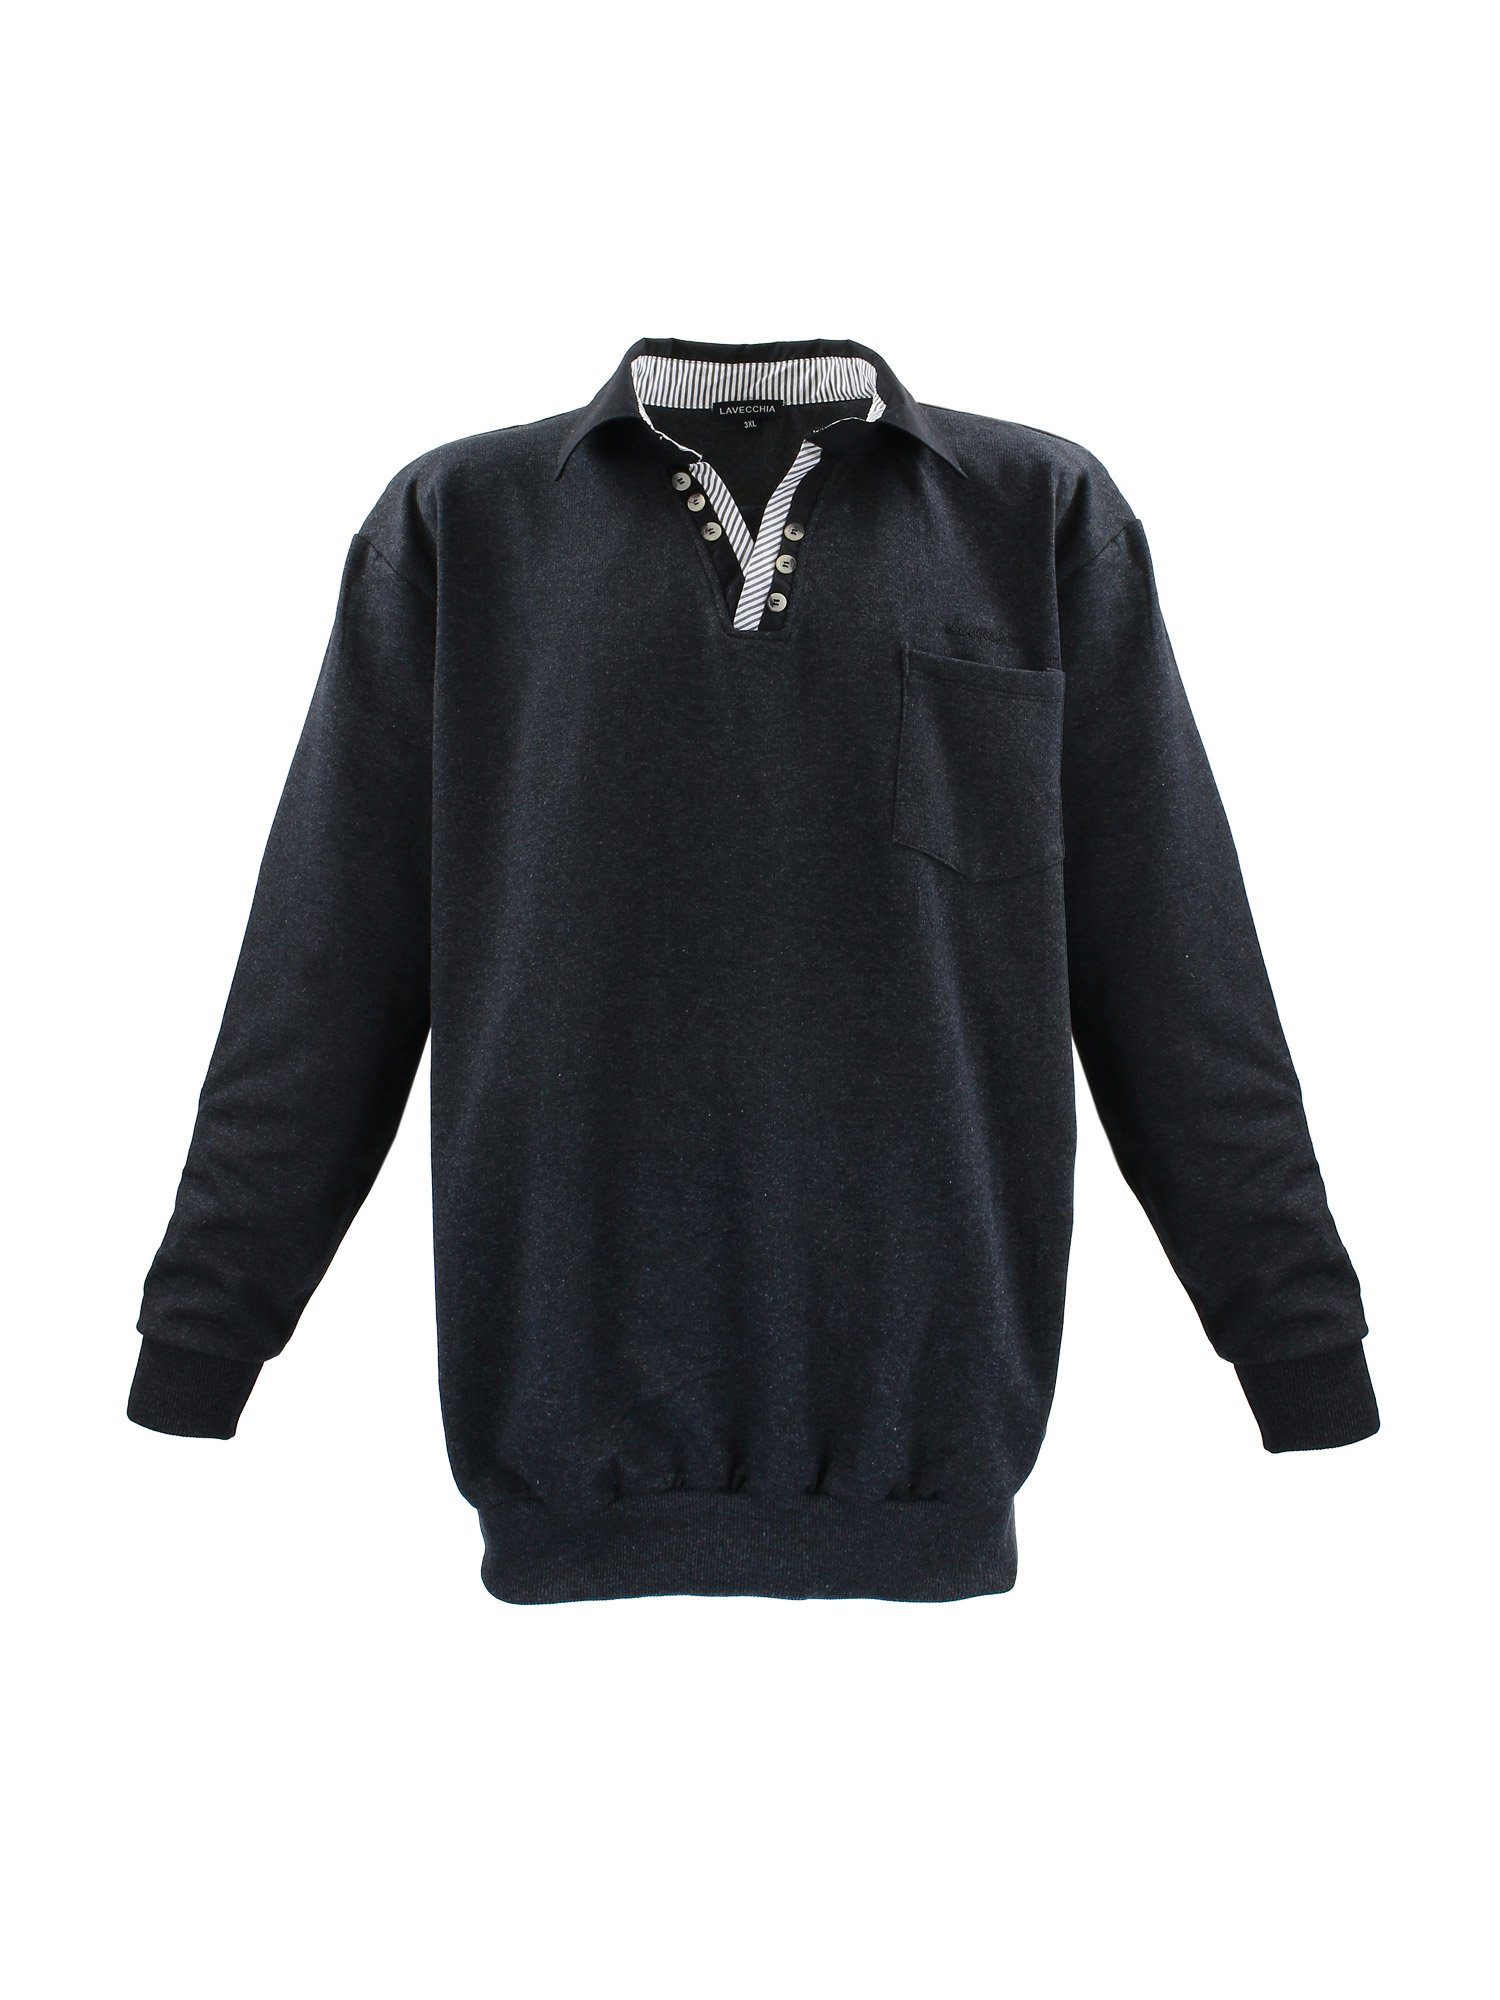 Lavecchia Sweatshirt Sweater anthrazit Langarmshirt LV-602 Übergrößen Polo